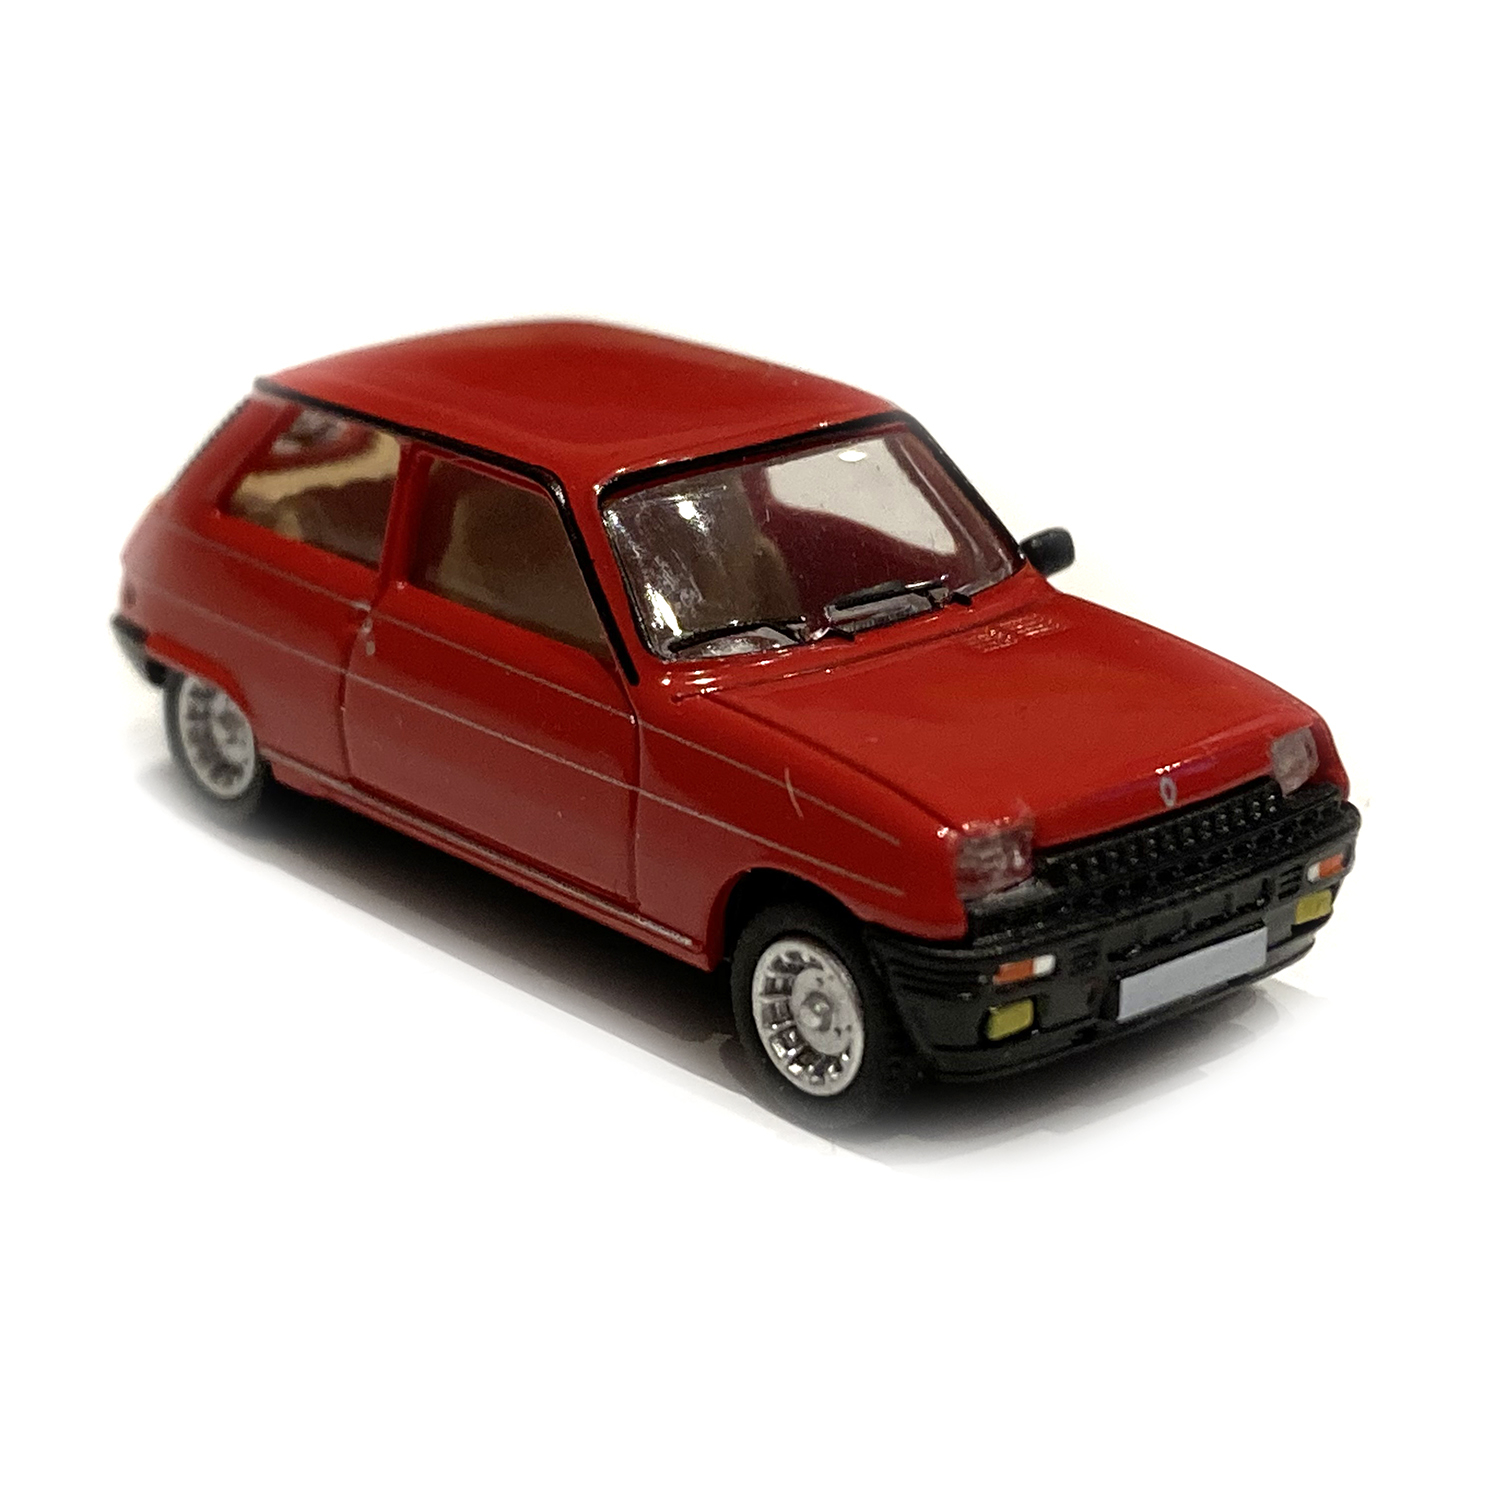 https://www.minimakit.com/185051/renault-5-alpine-turbo-rouge-1982-sai-pcx87-7229-187.jpg